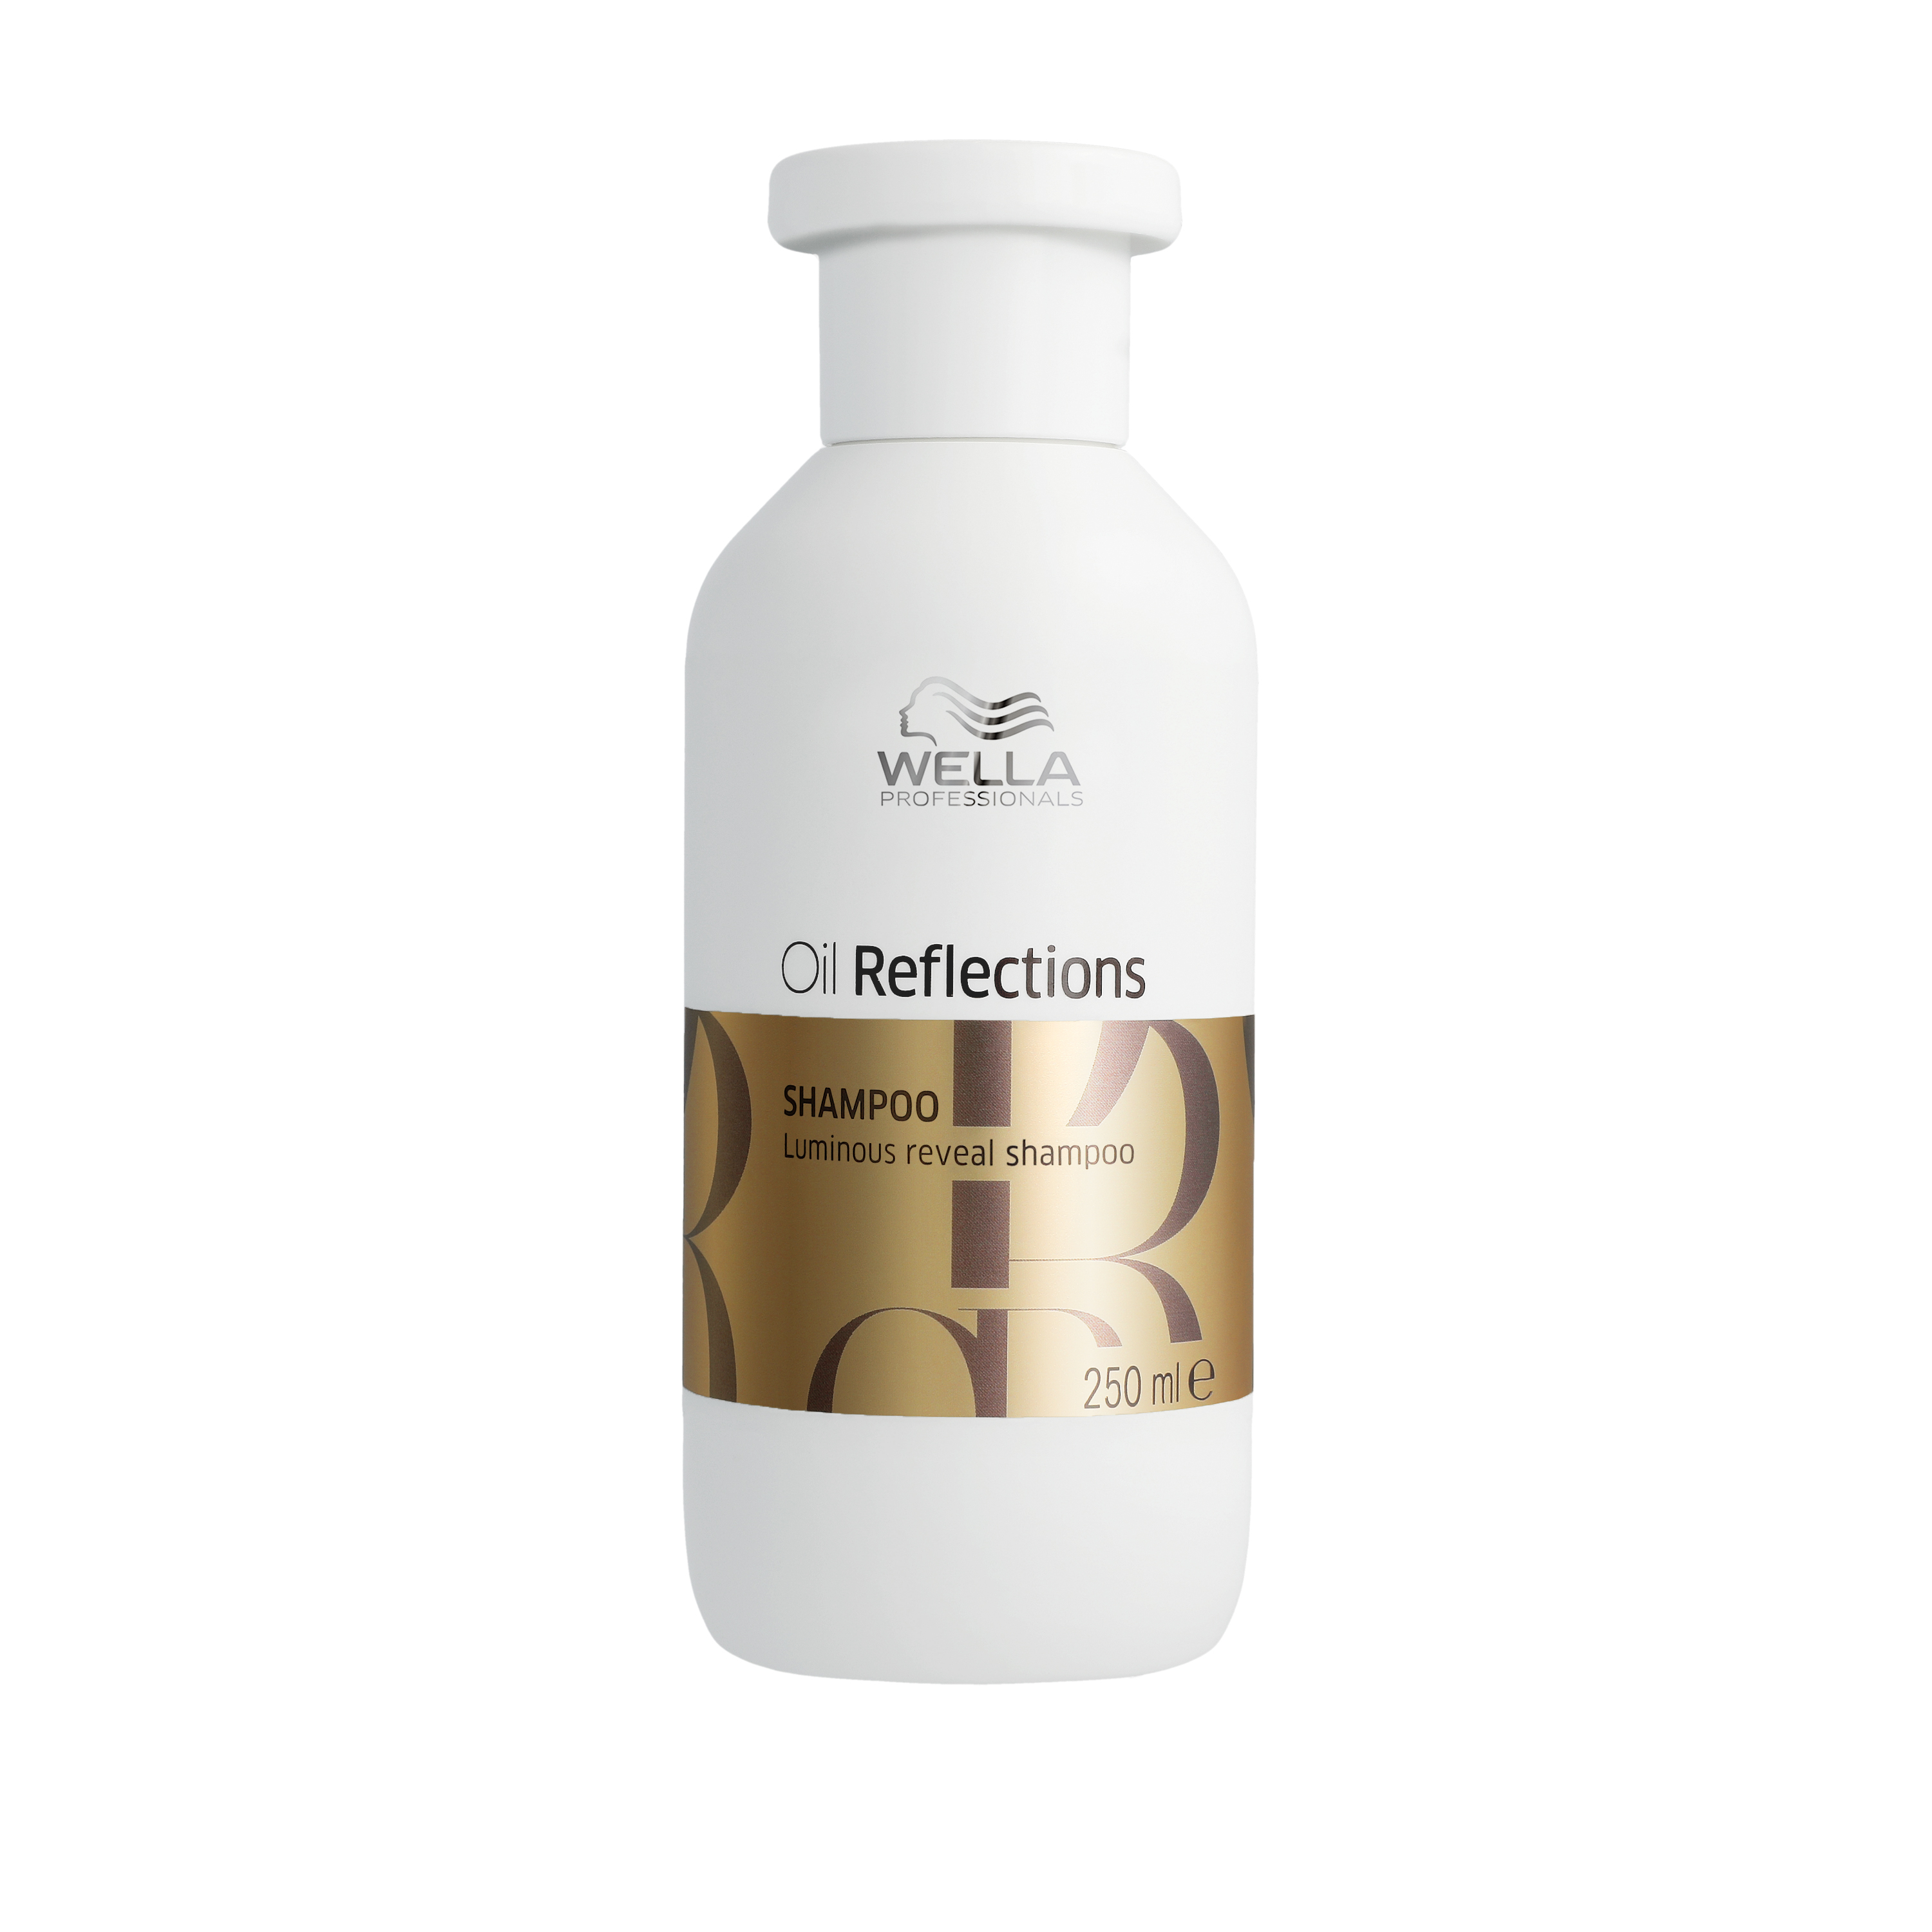 Wella Oil Reflections Shampoo 250ml